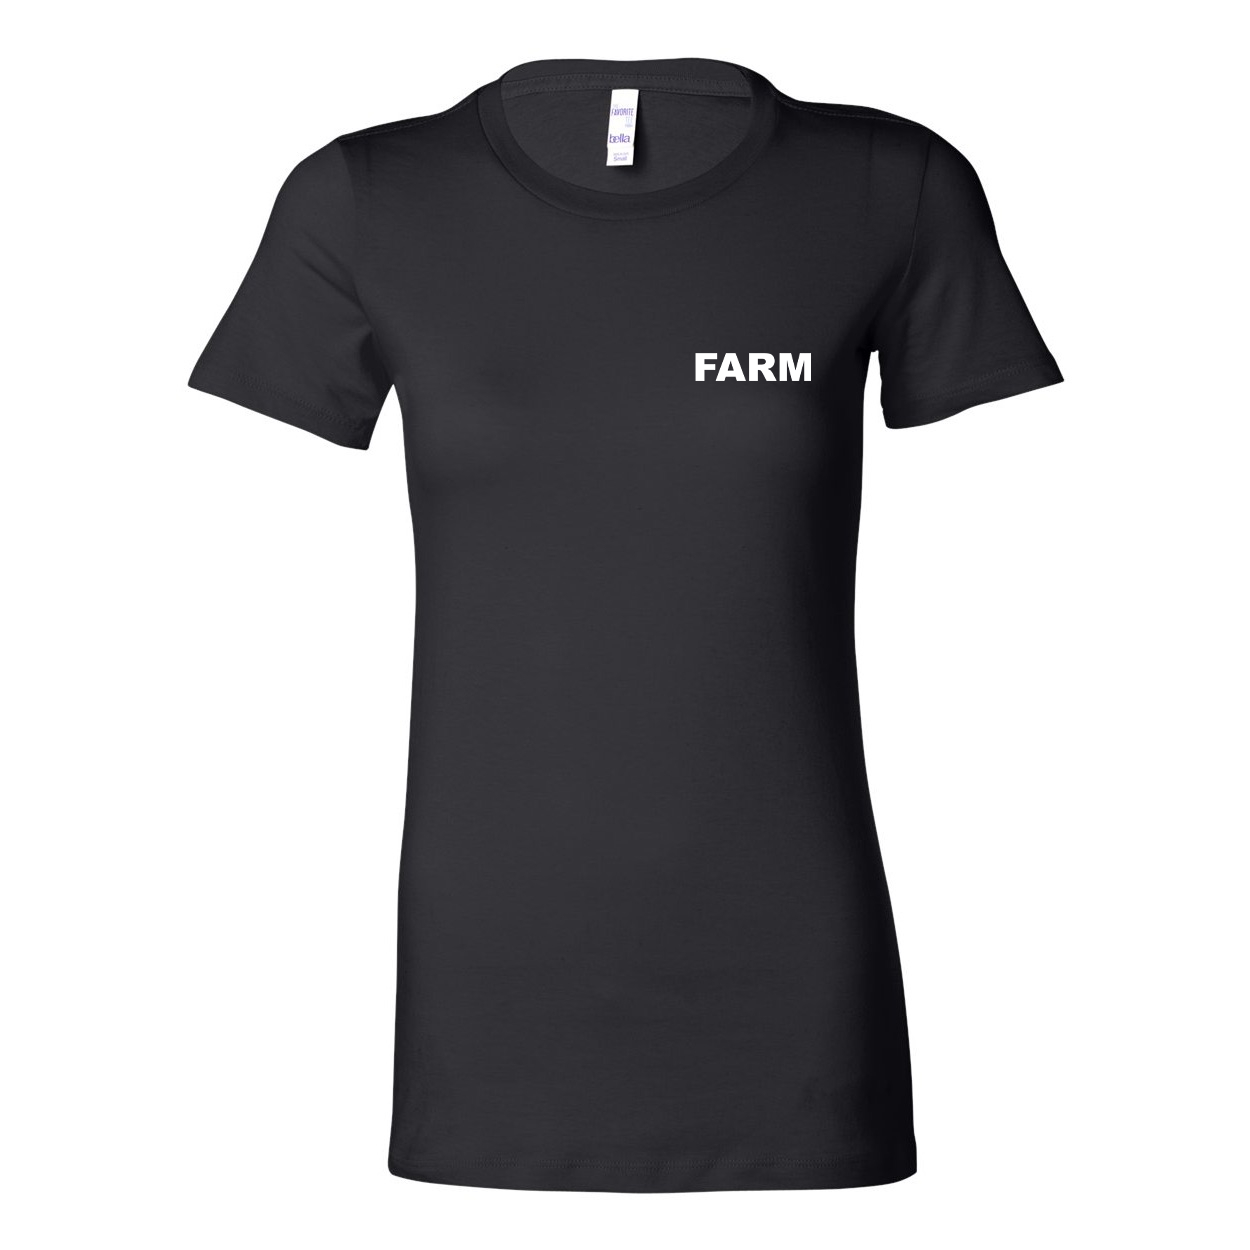 Farm Brand Logo Women's Night Out Fitted Tri-Blend T-Shirt Black